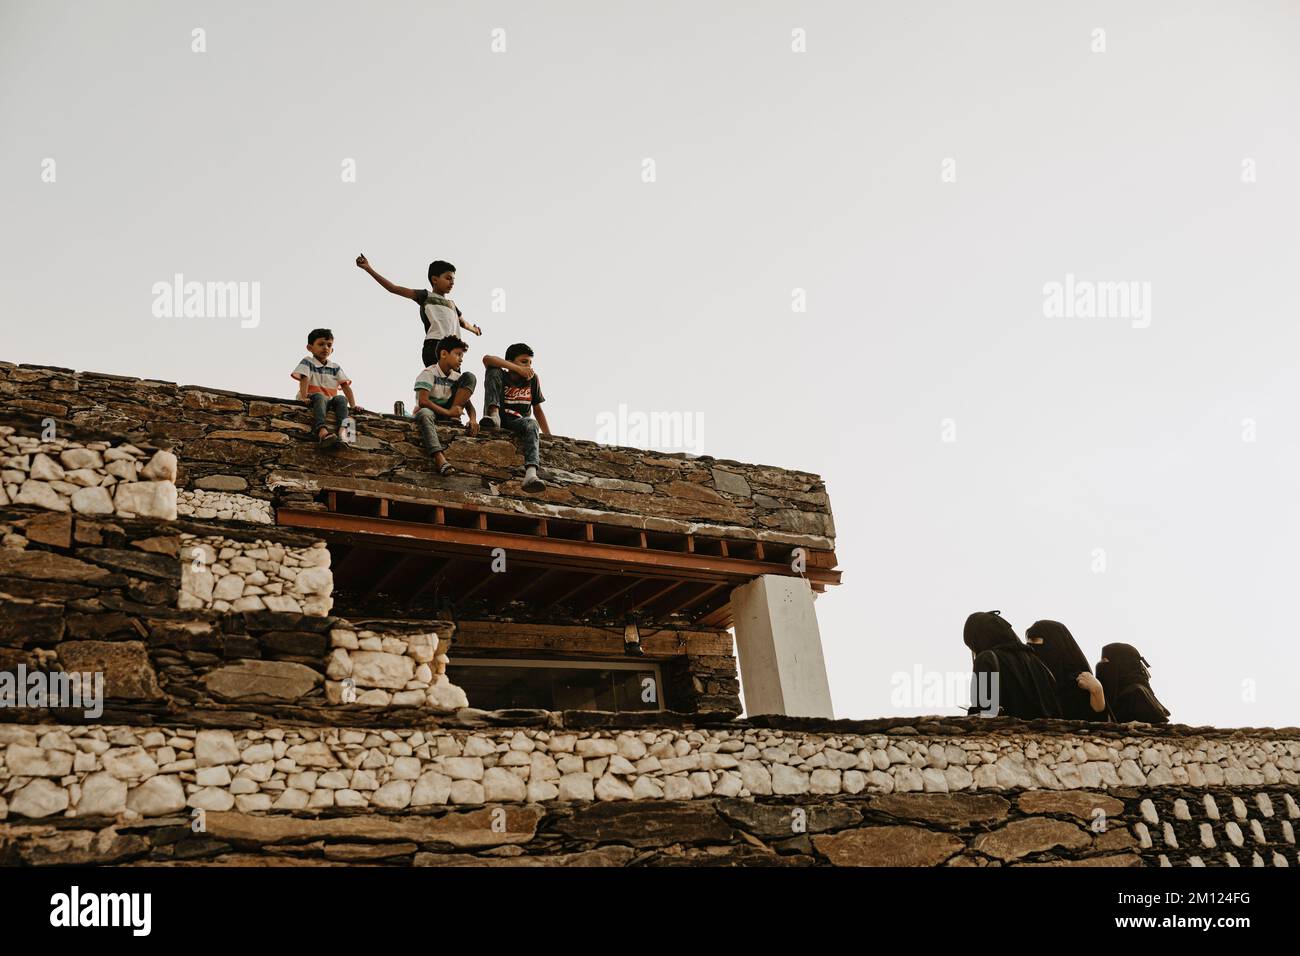 Saudi Arabia, Najran province, Najran, building, roof, children Stock Photo